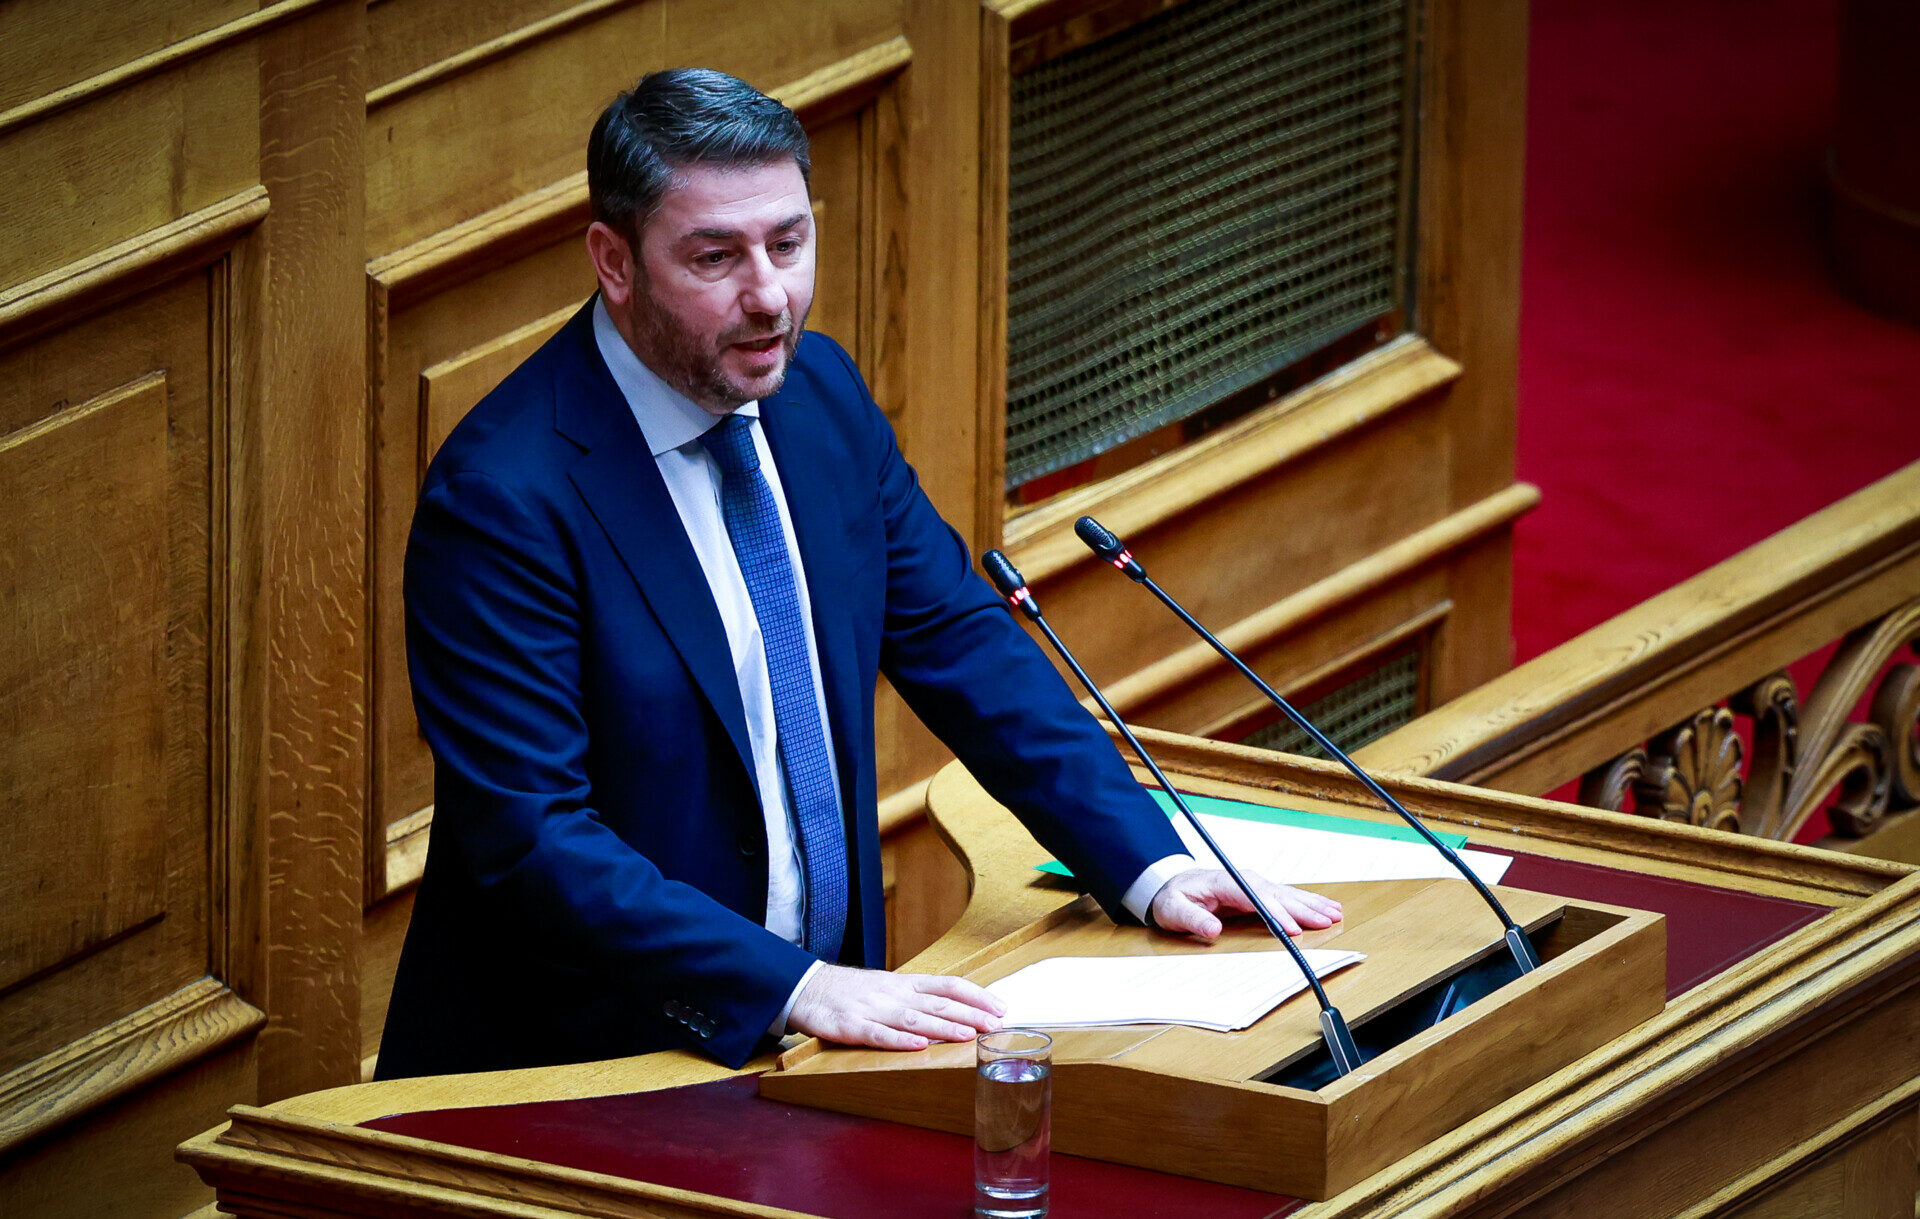 O Nίκος Ανδρουλάκης στη συζήτηση στην Ολομέλεια της Βουλής, των άρθρων και του συνόλου του σχεδίου νόμου "Δάνεια. Διαφάνεια, ανταγωνισμός, προστασία των ευάλωτων - Ενσωμάτωση της Οδηγίας (ΕΕ) 2021/2167, επανεισαγωγή του προγράμματος "ΗΡΑΚΛΗΣ" και άλλες επείγουσες διατάξεις@eurokinissi